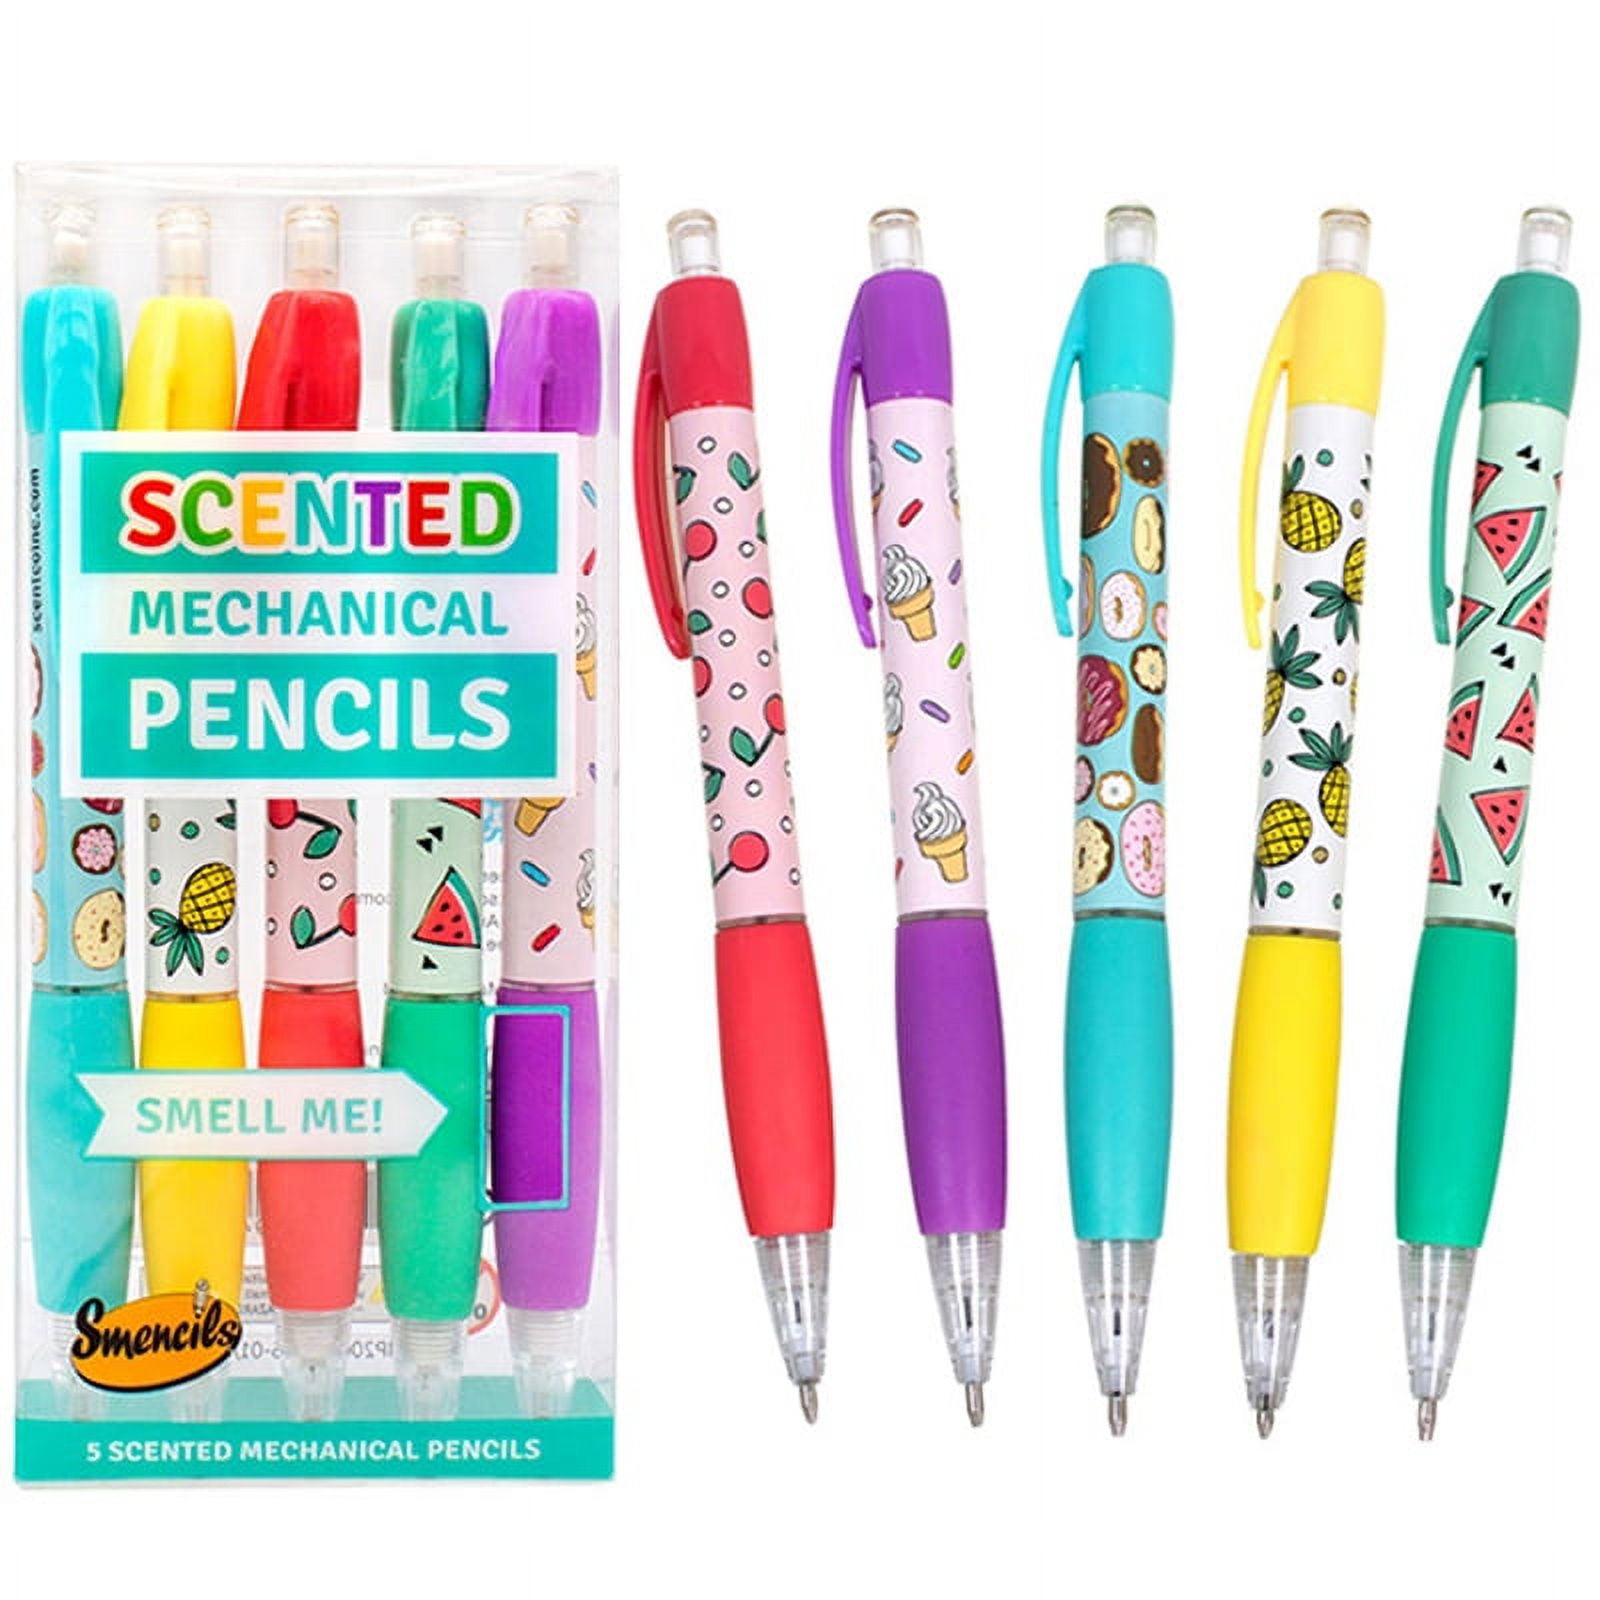 Scentco Unicorn Scented Smencils 8-Pack Mechanical Pencils – Aura